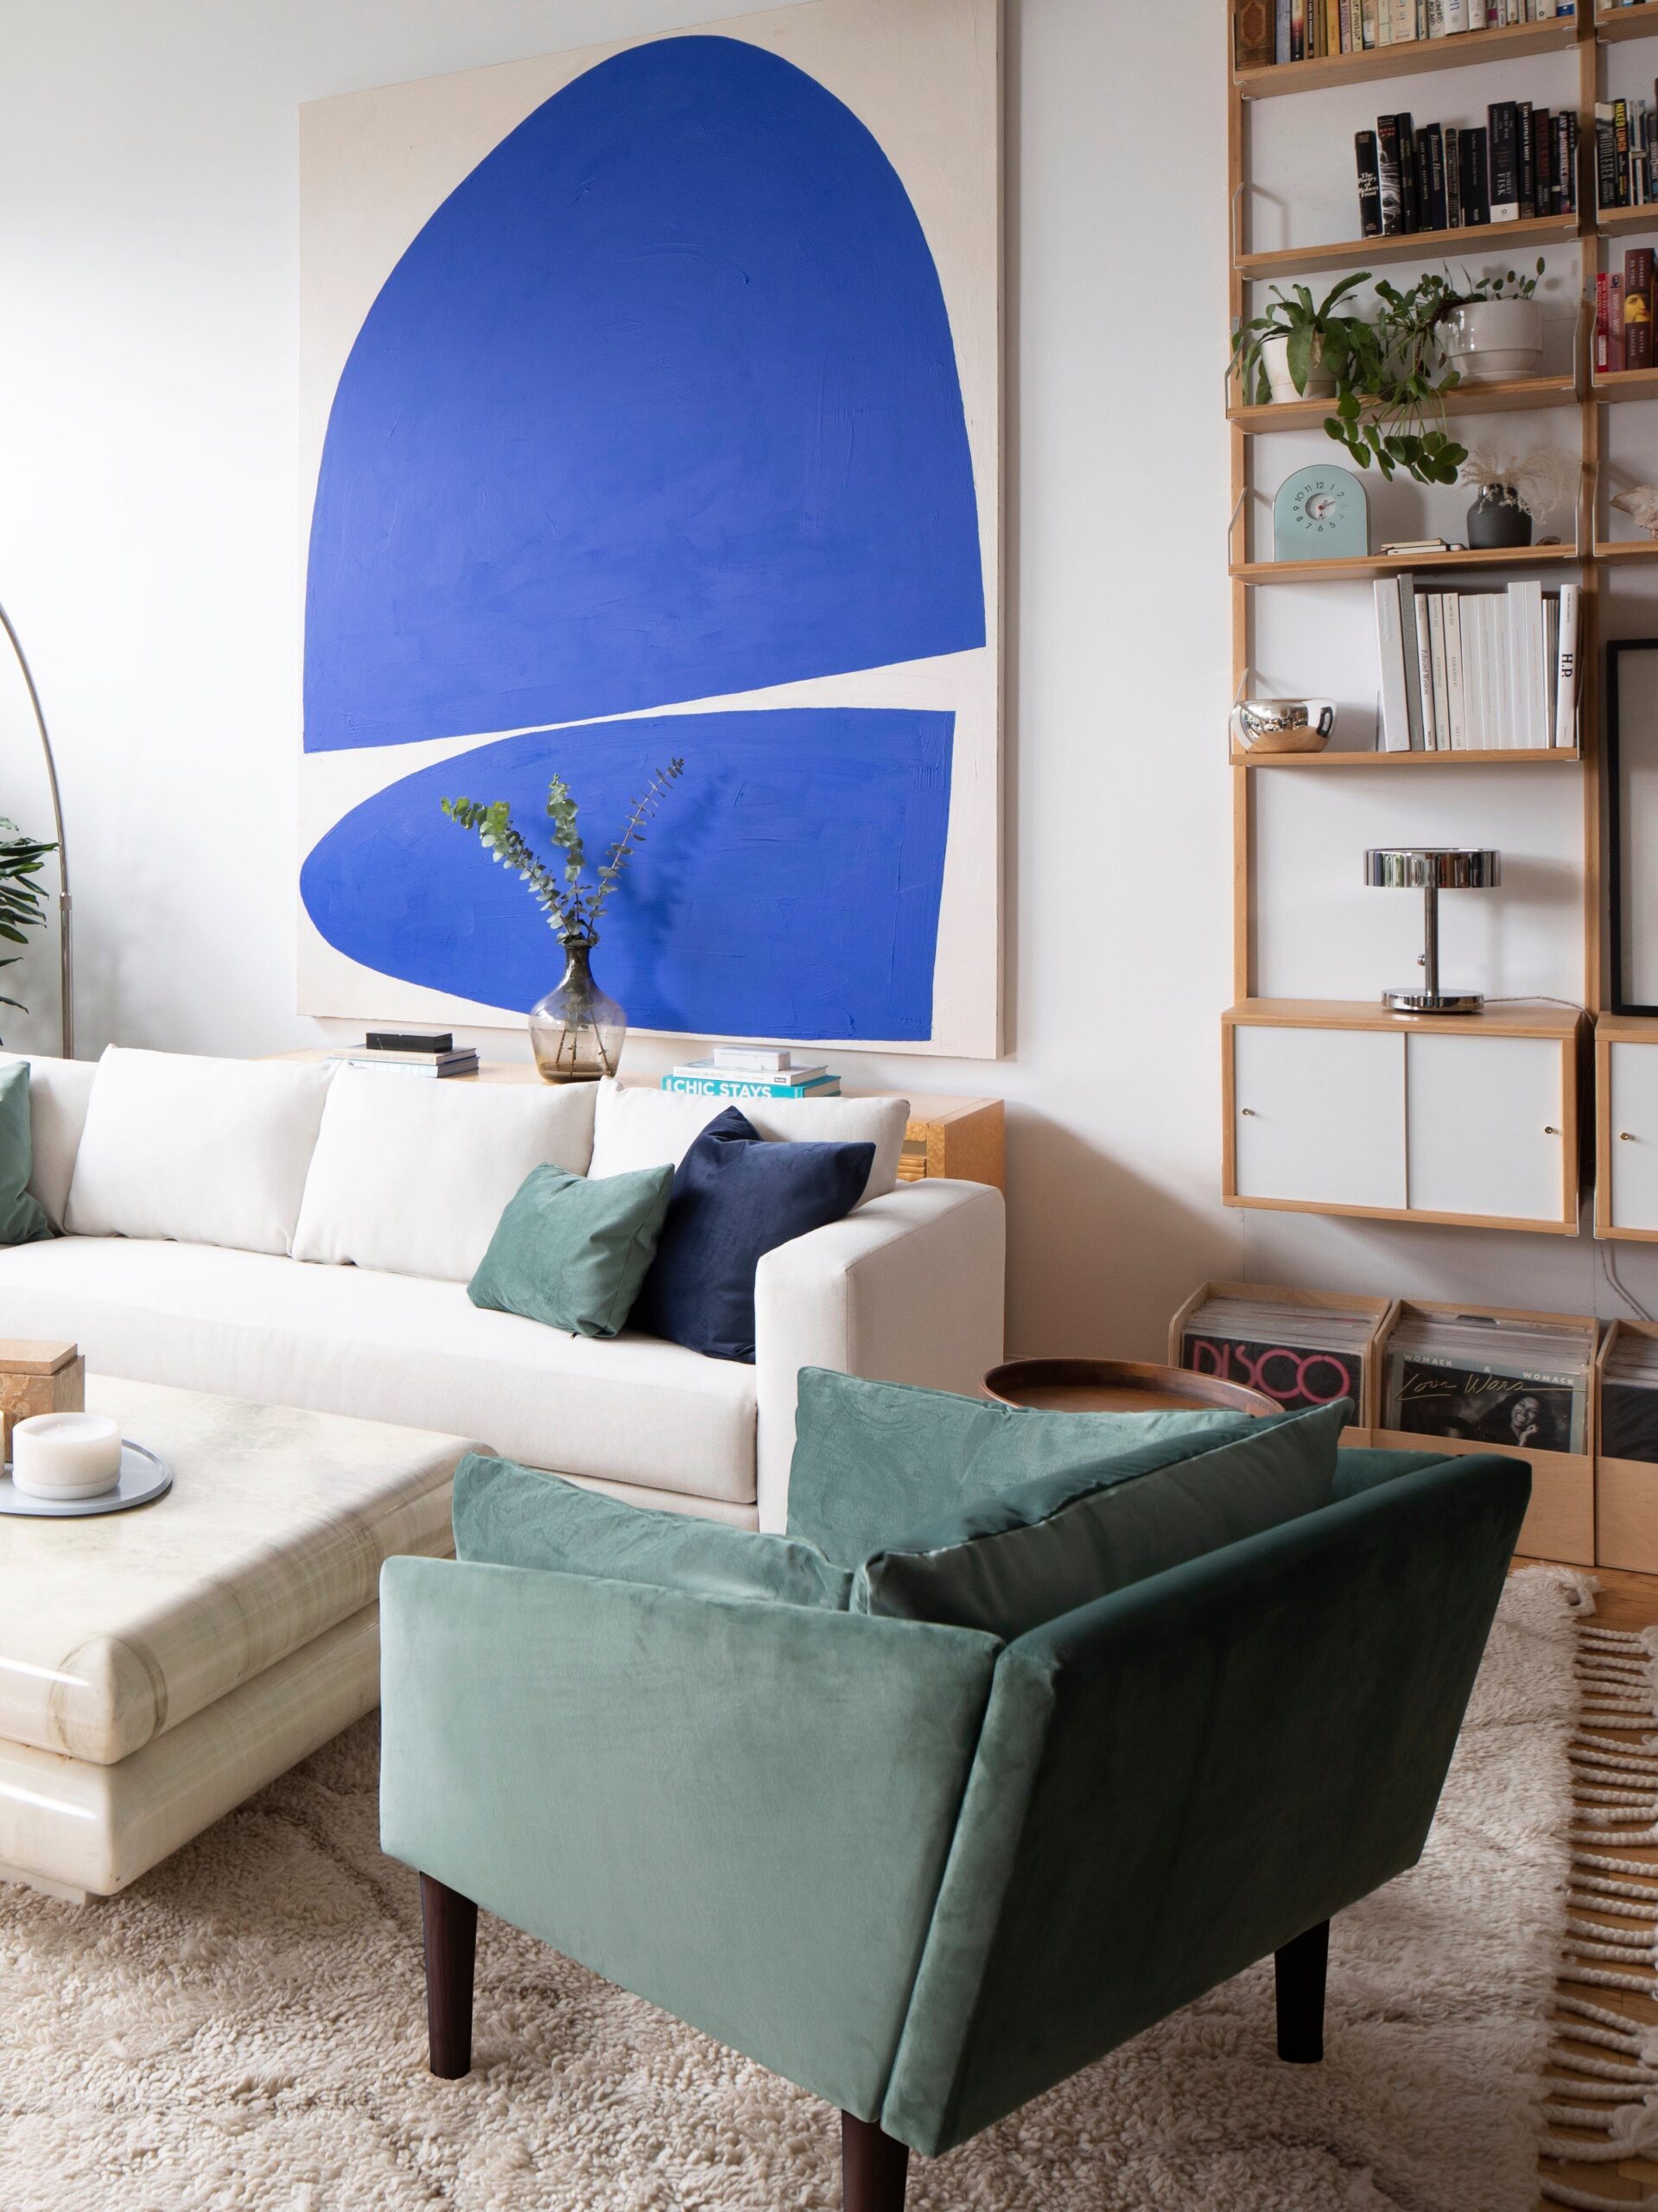 A living room with Sabai furniture.